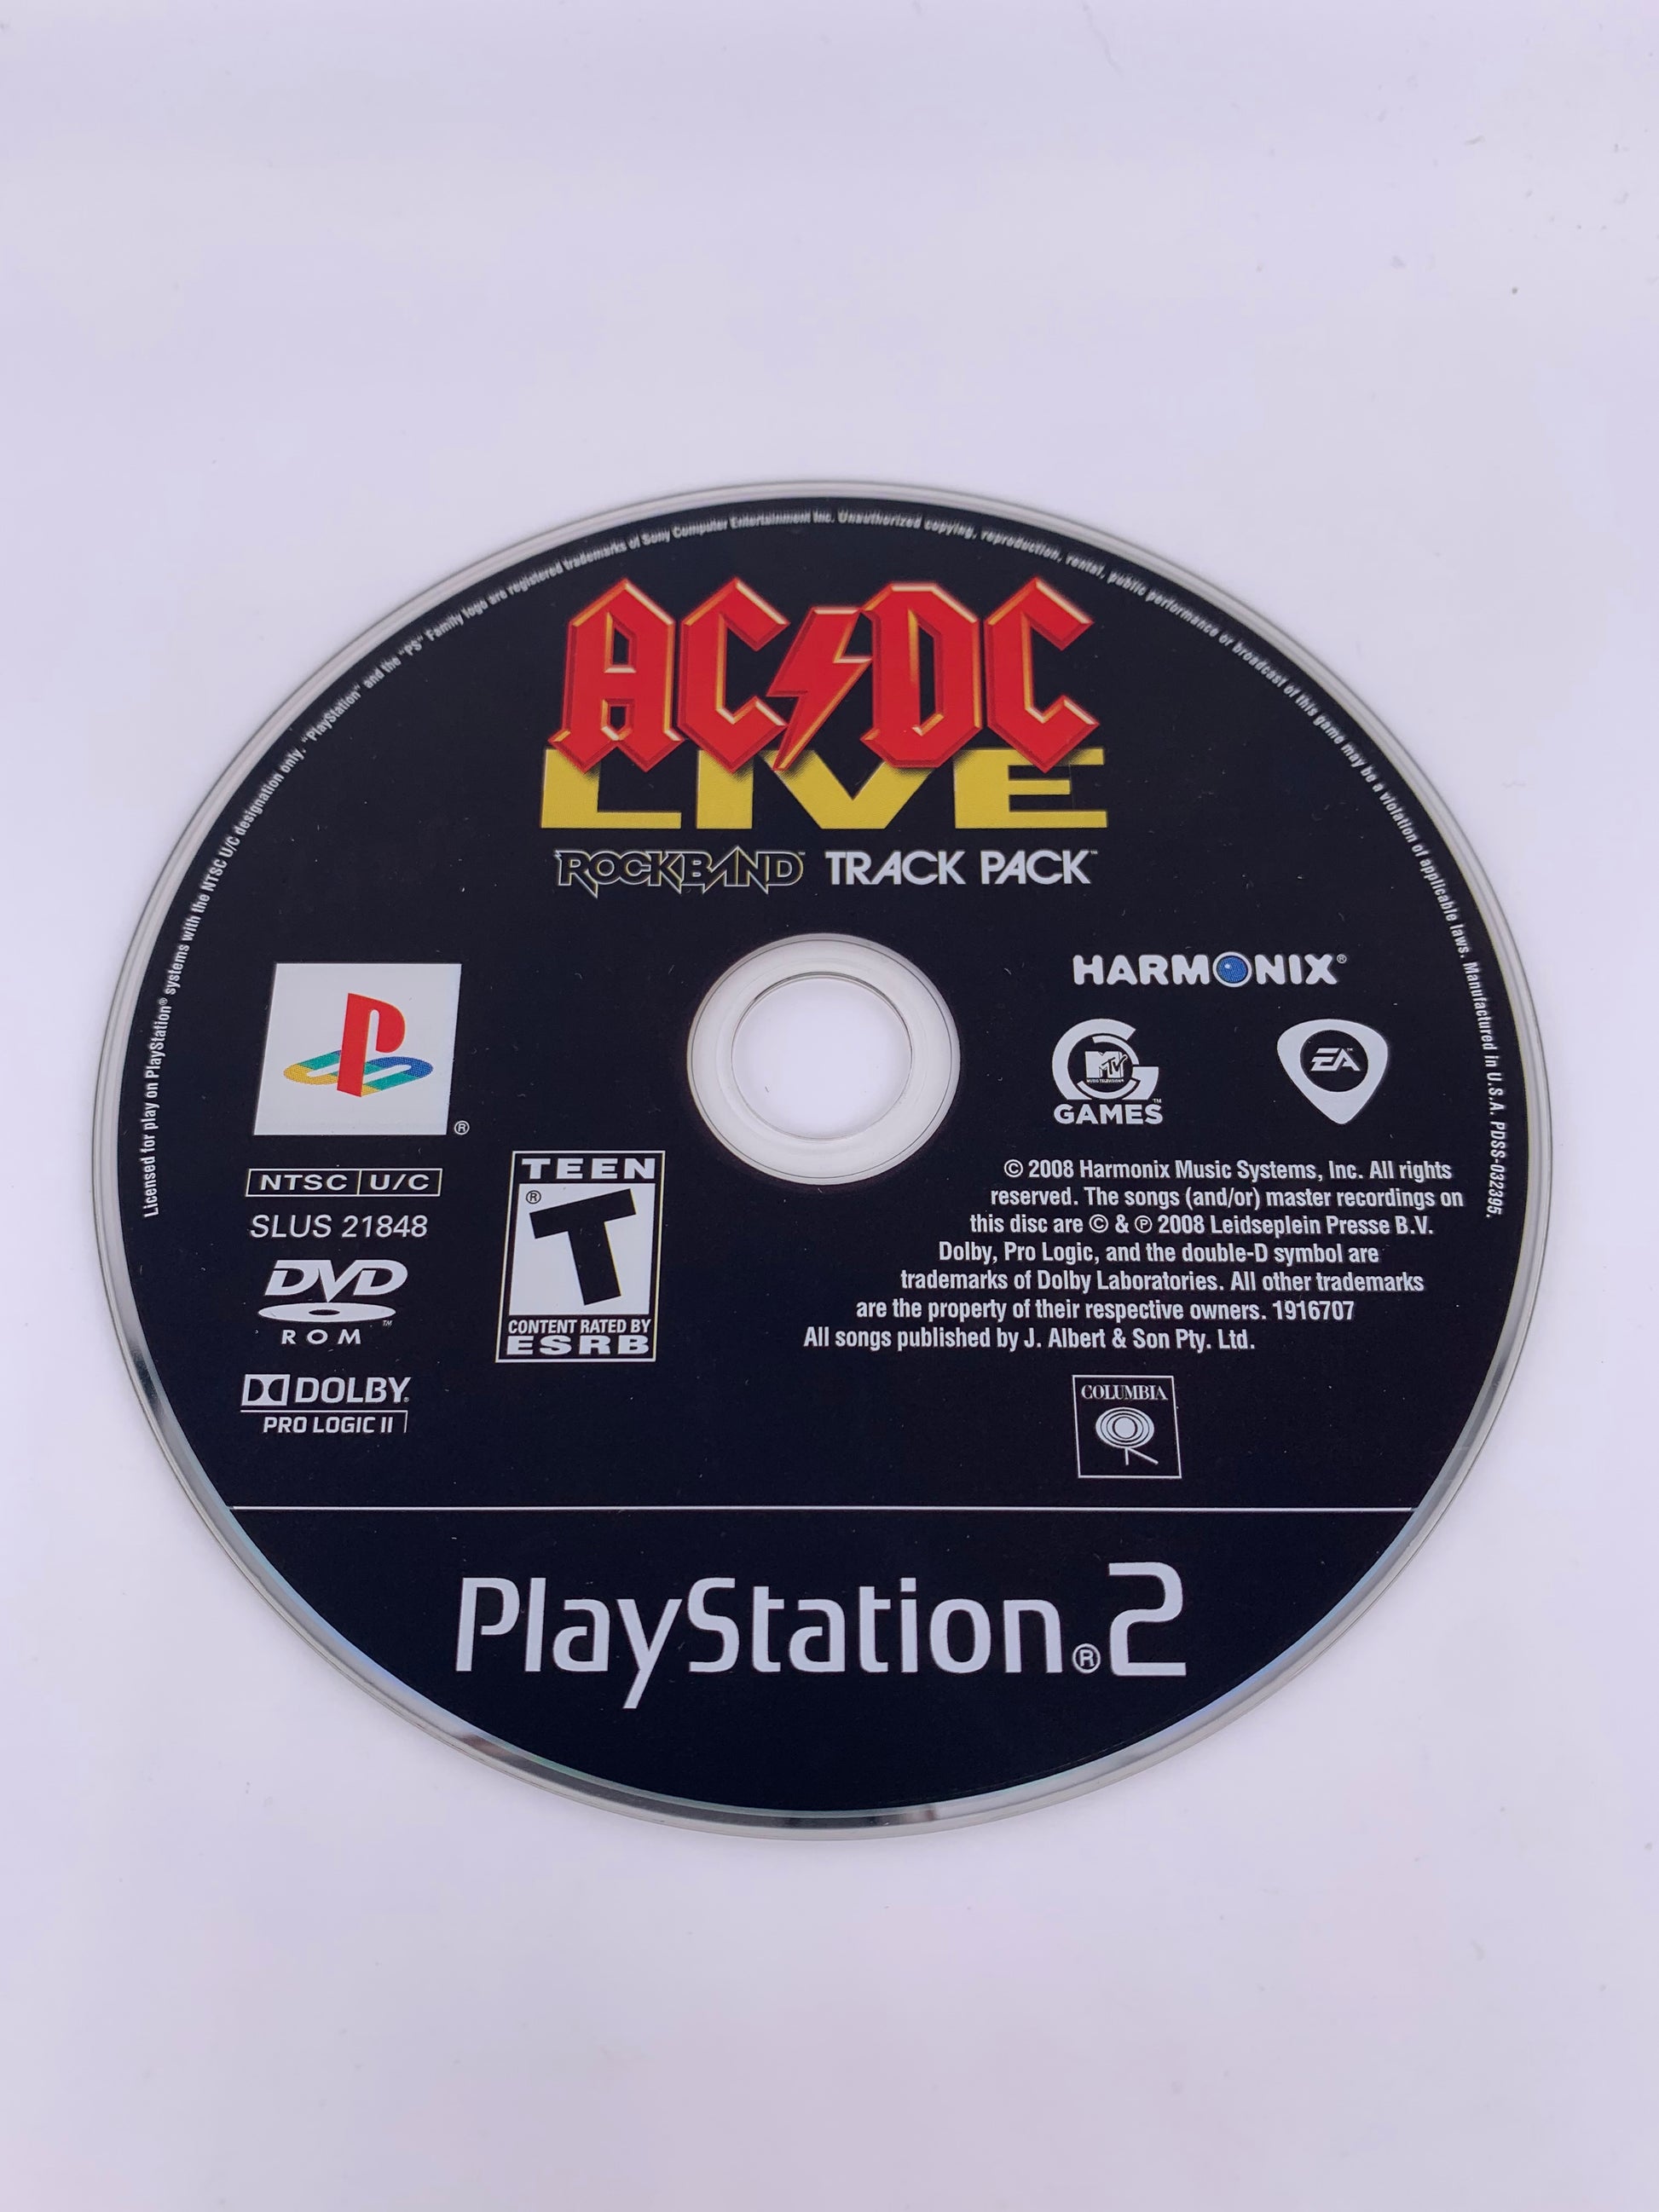 PiXEL-RETRO.COM : SONY PLAYSTATION 2 (PS2) COMPLET CIB BOX MANUAL GAME NTSC AC/DC LIVE ROCK BAND TRACK PACK